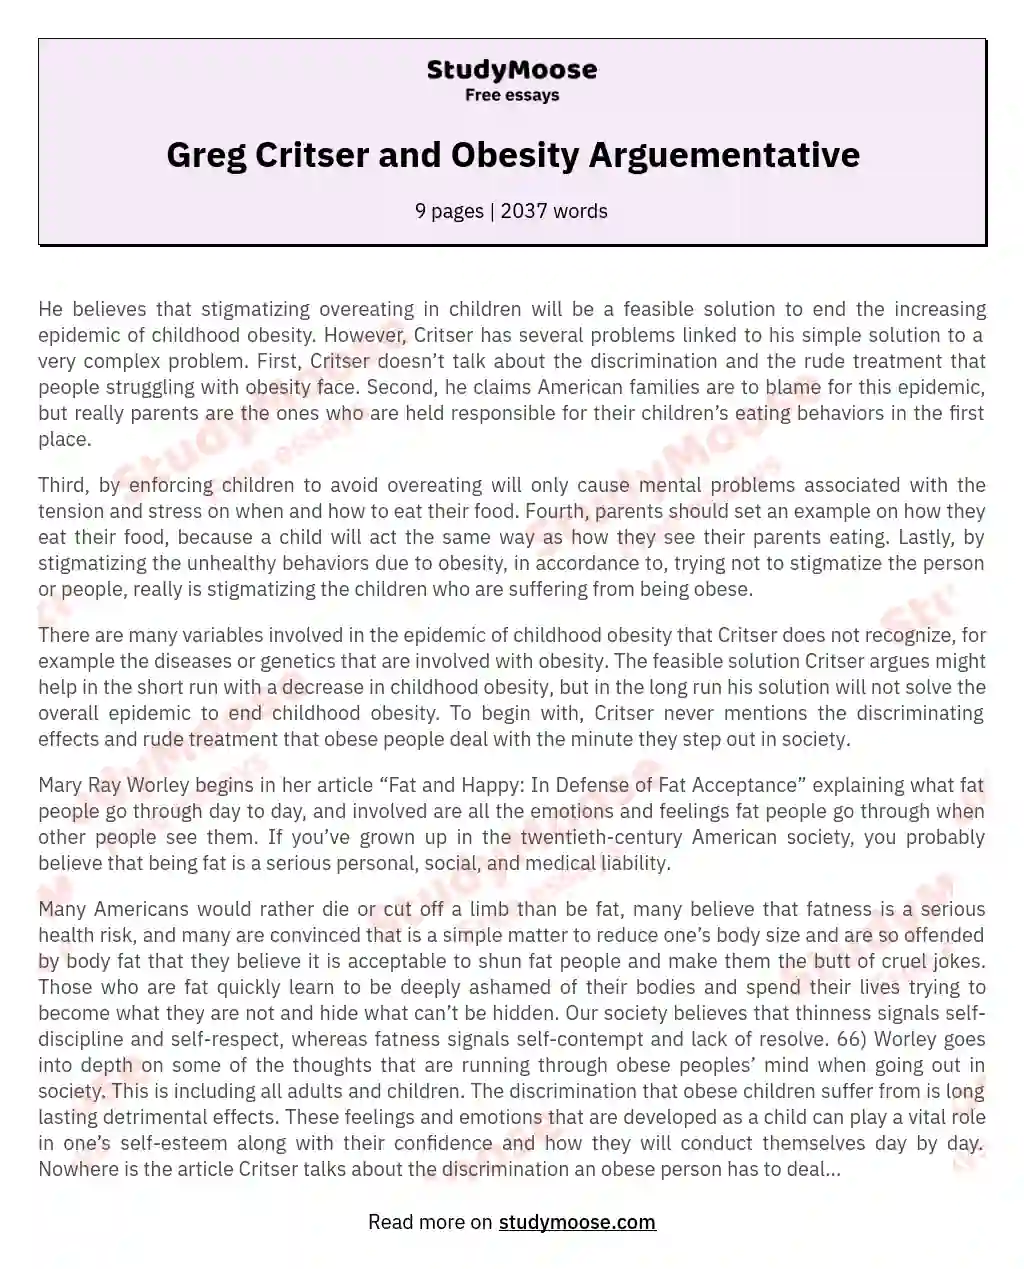 Greg Critser and Obesity Arguementative essay